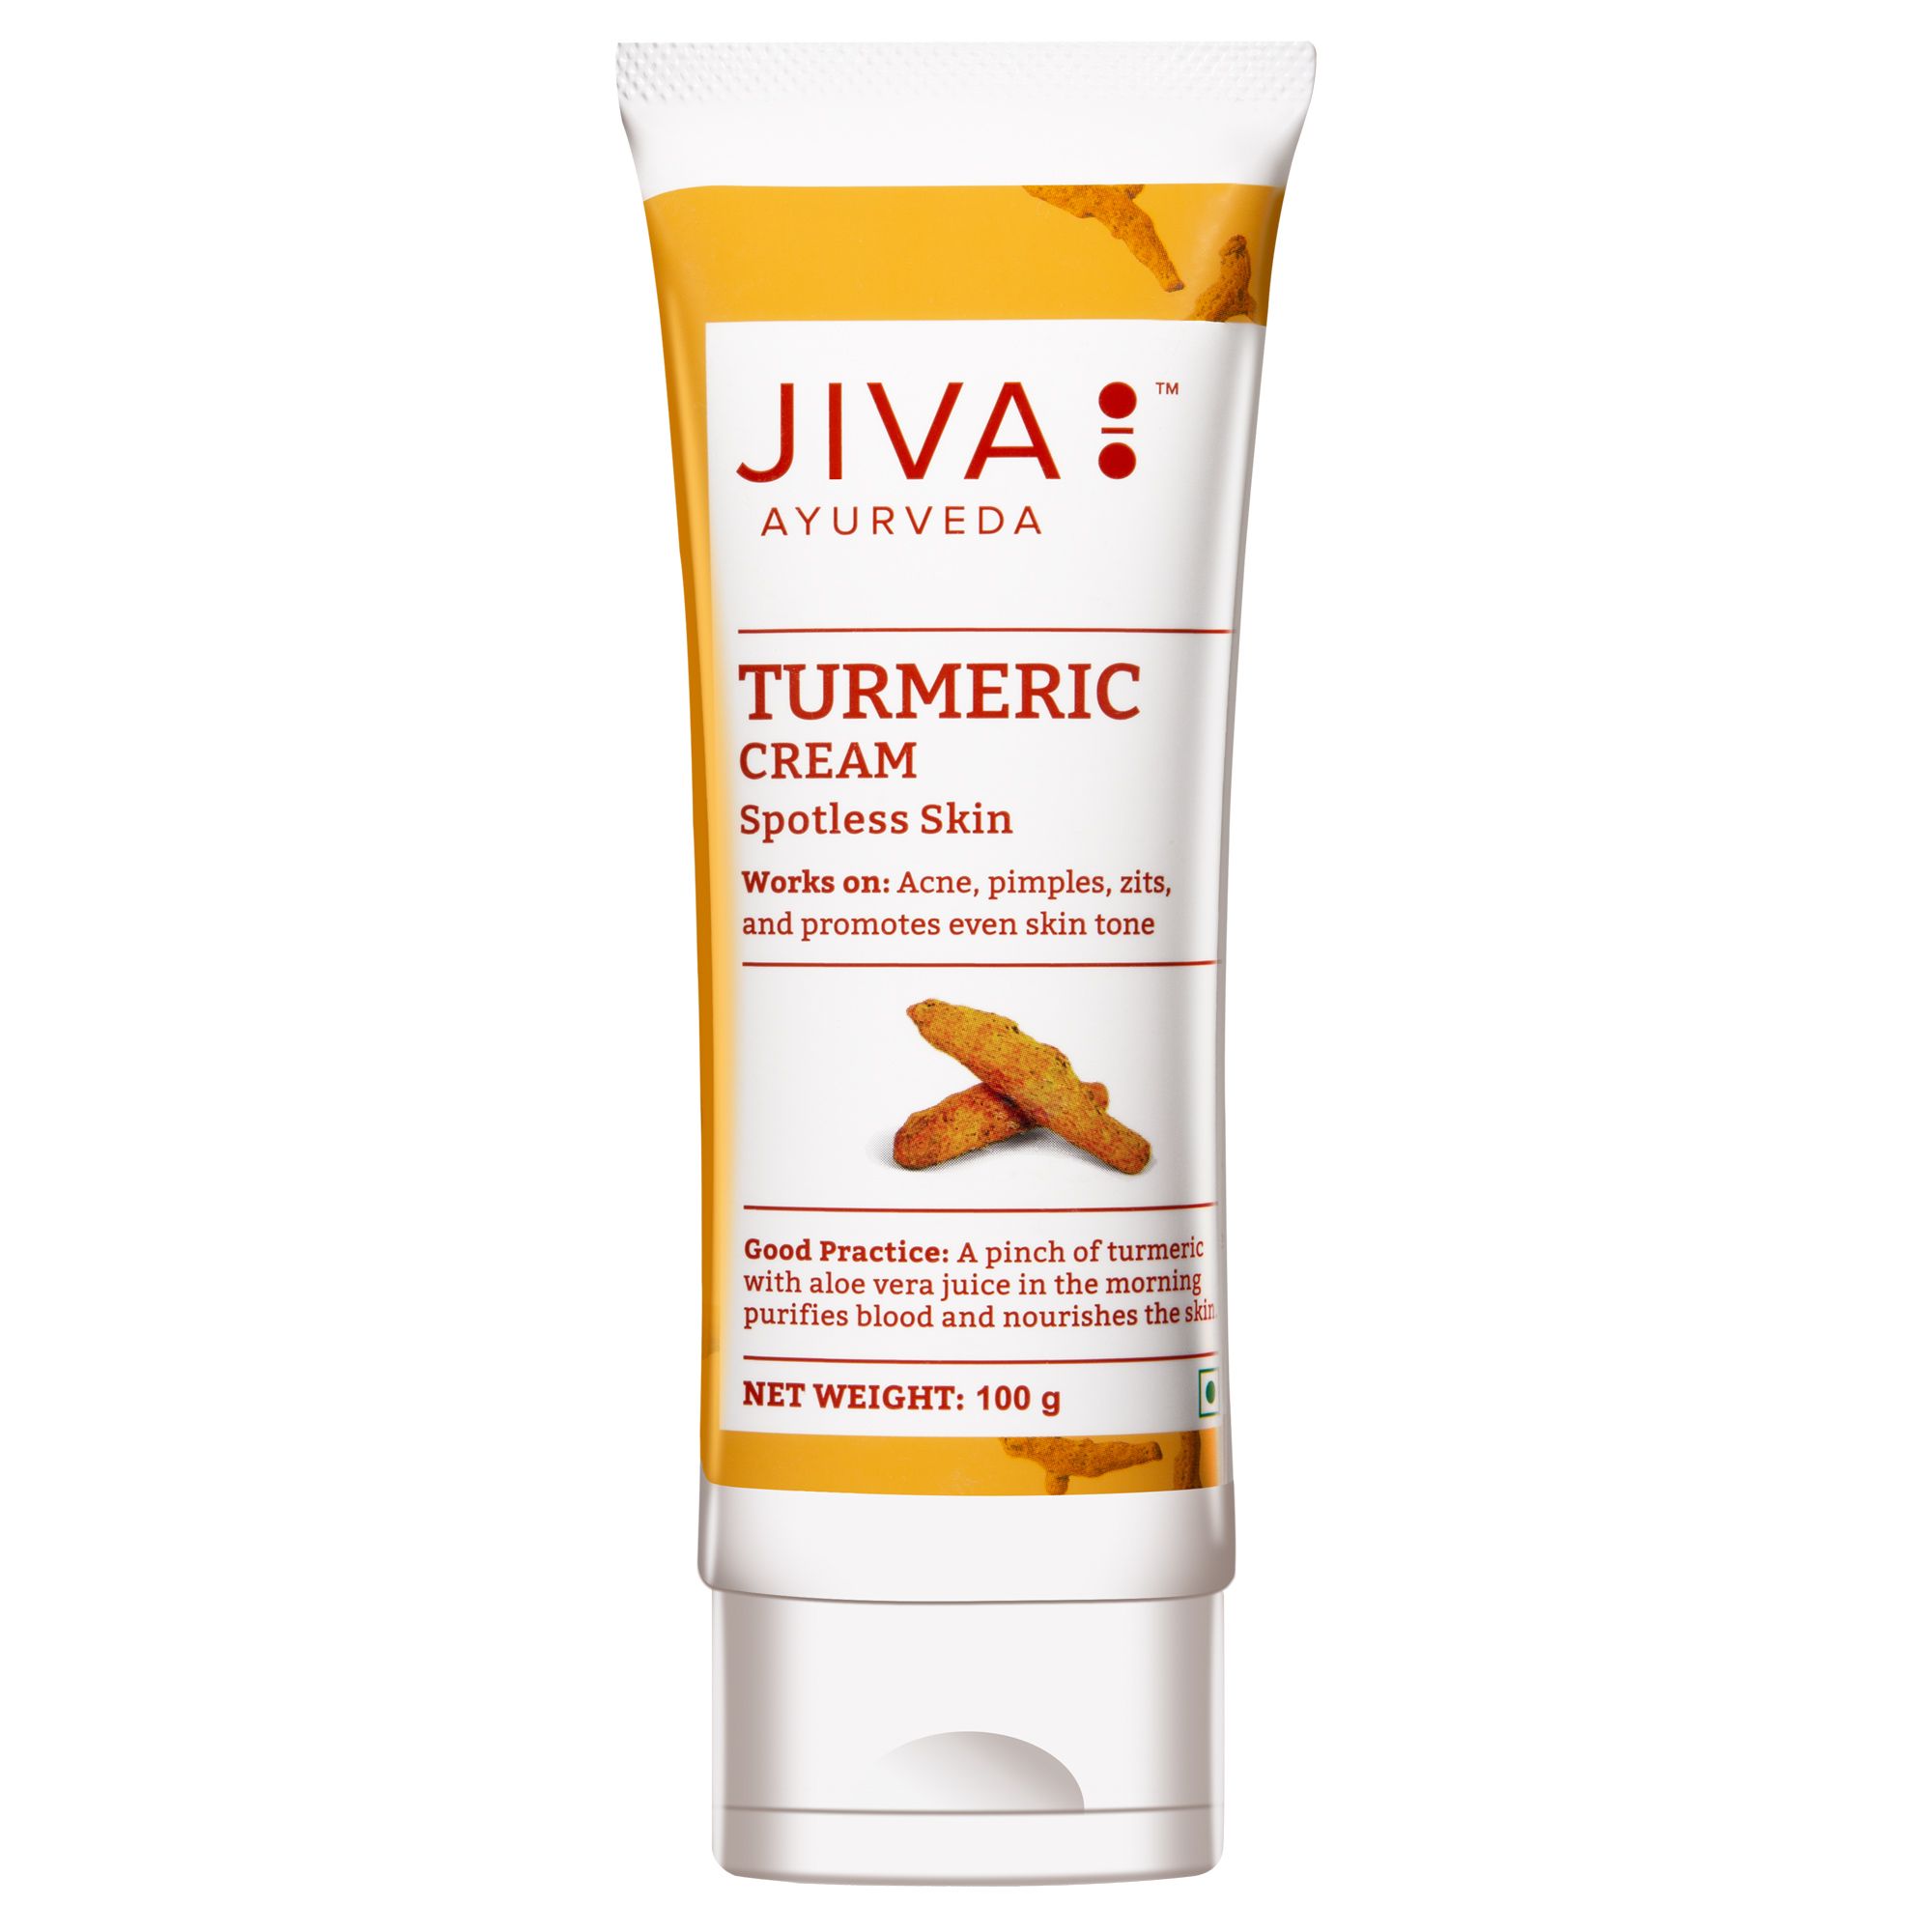 Buy Jiva Ayurveda Turmeric Cream at Best Price Online